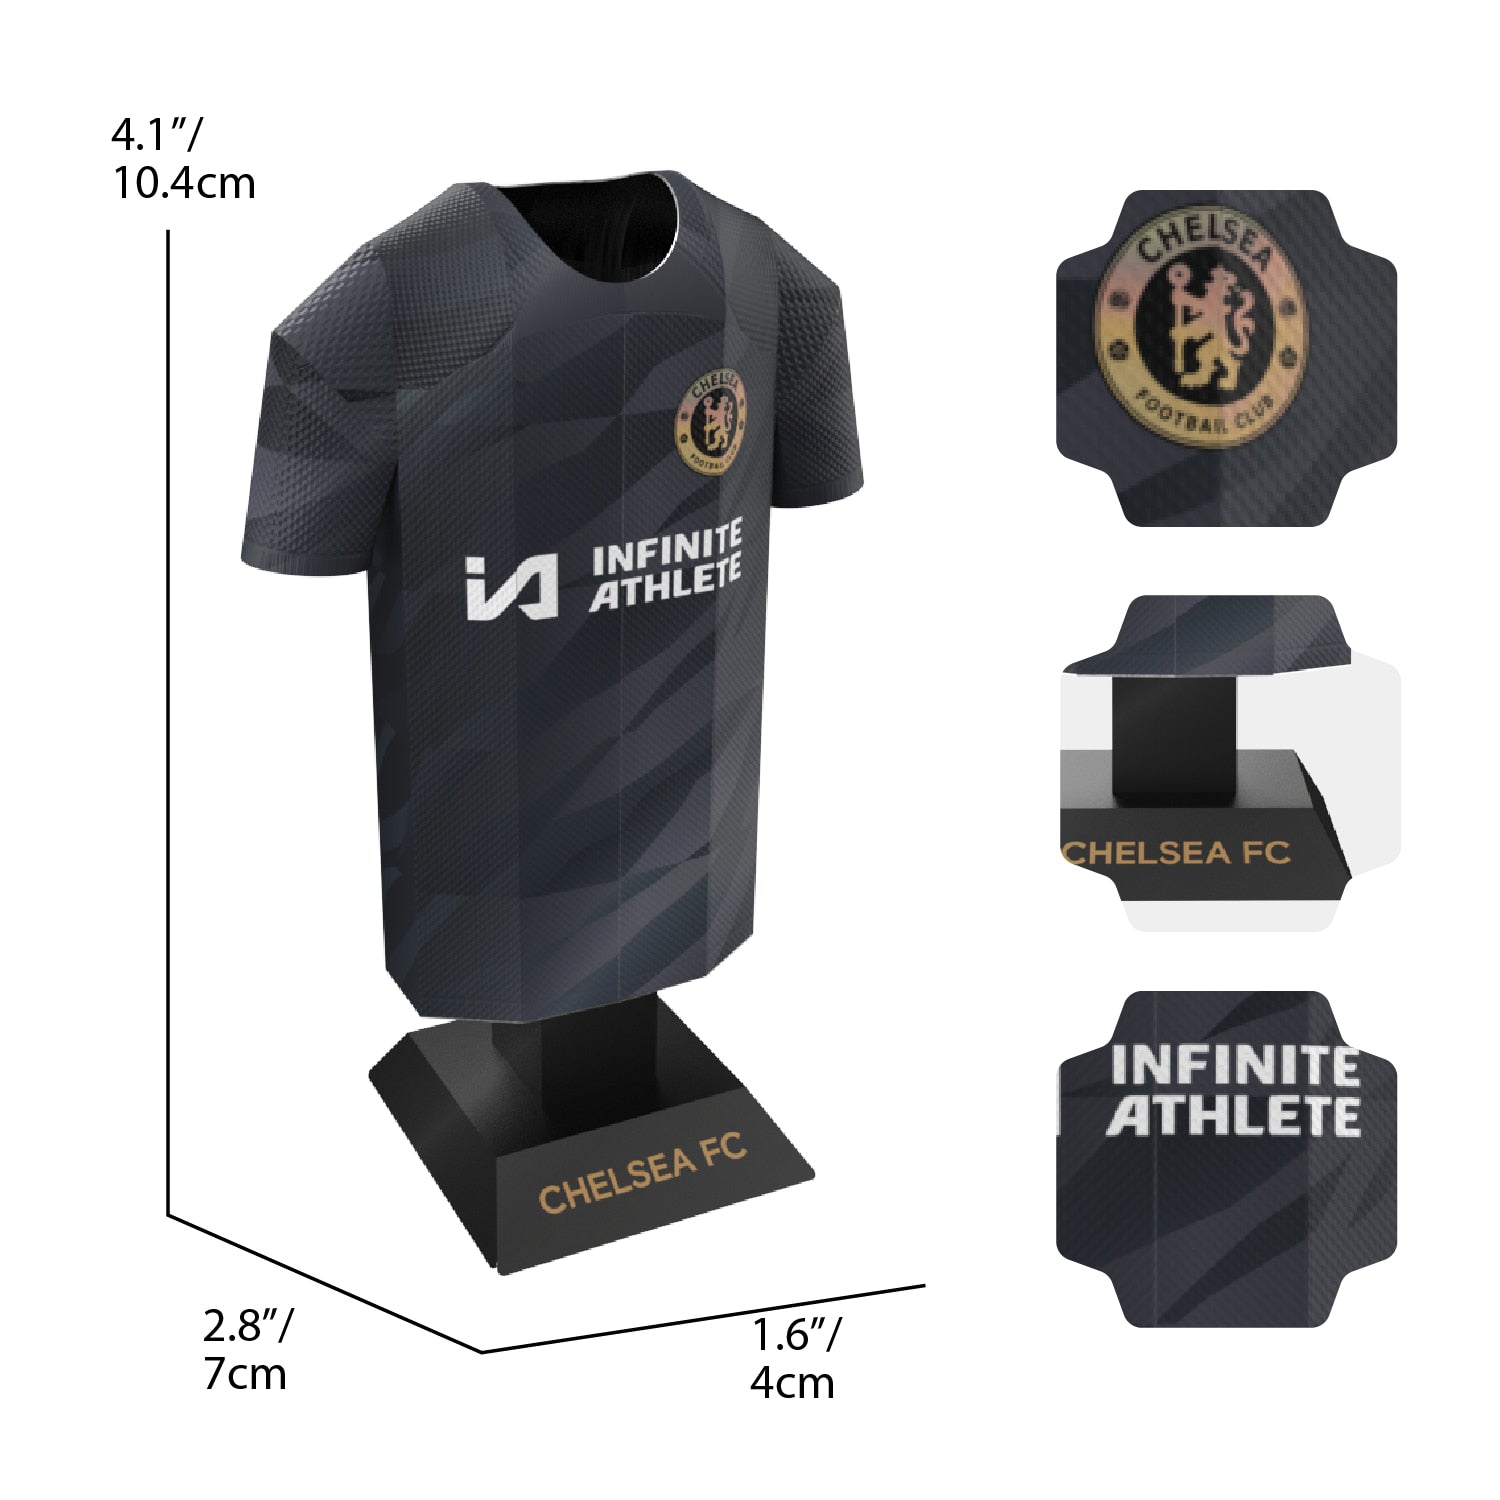 Chelsea goalkeeper kit dimensions